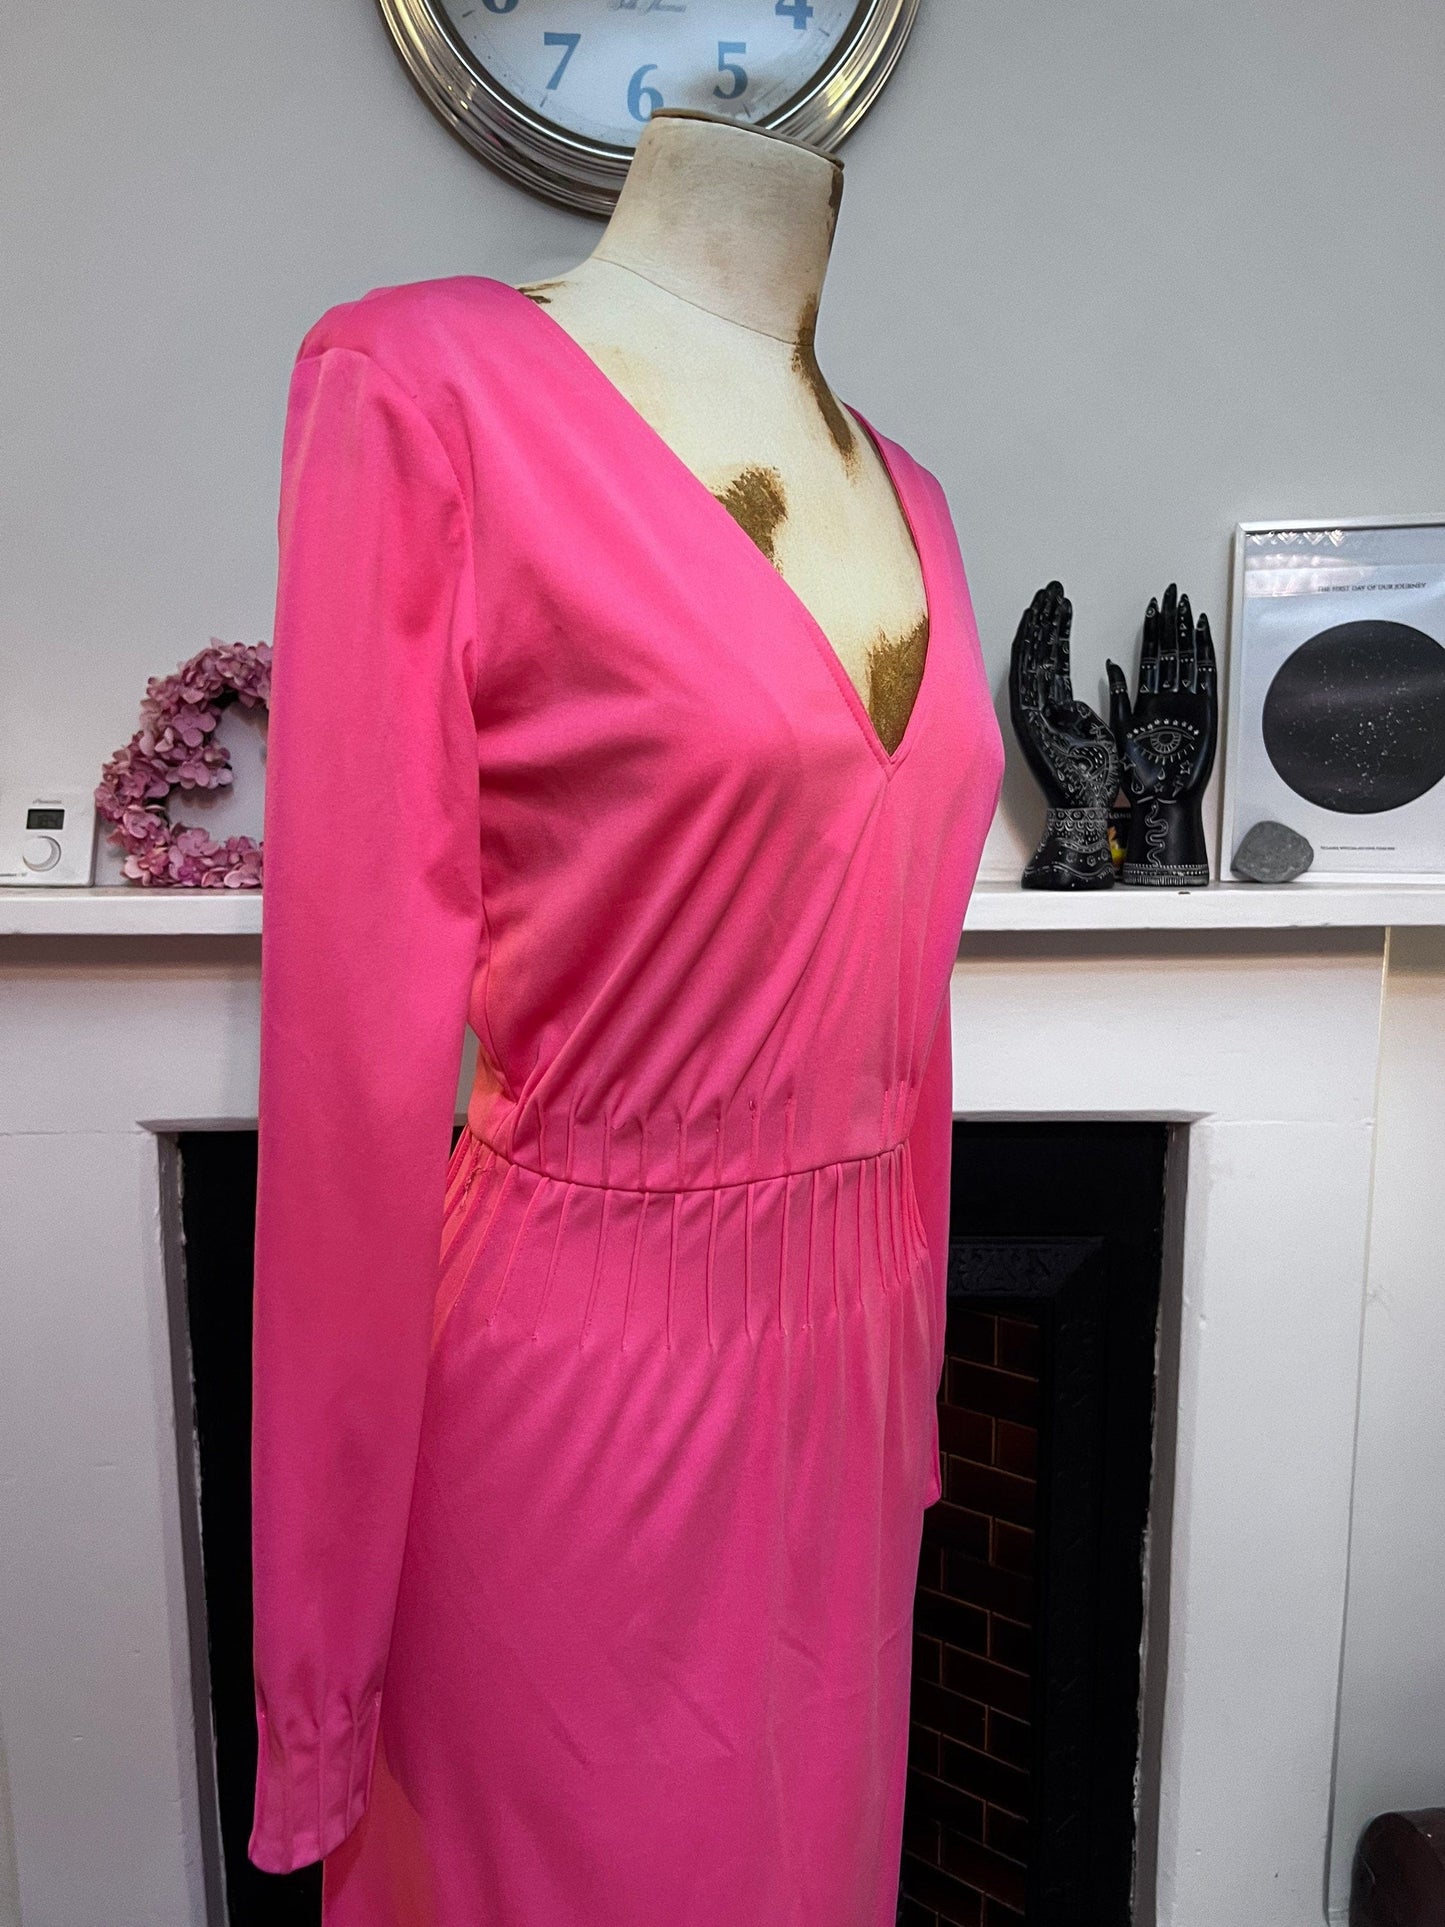 Vintage Dress Pink Maxi Dress seen V neck - Fabulous Condition - Jean Allen 1960s